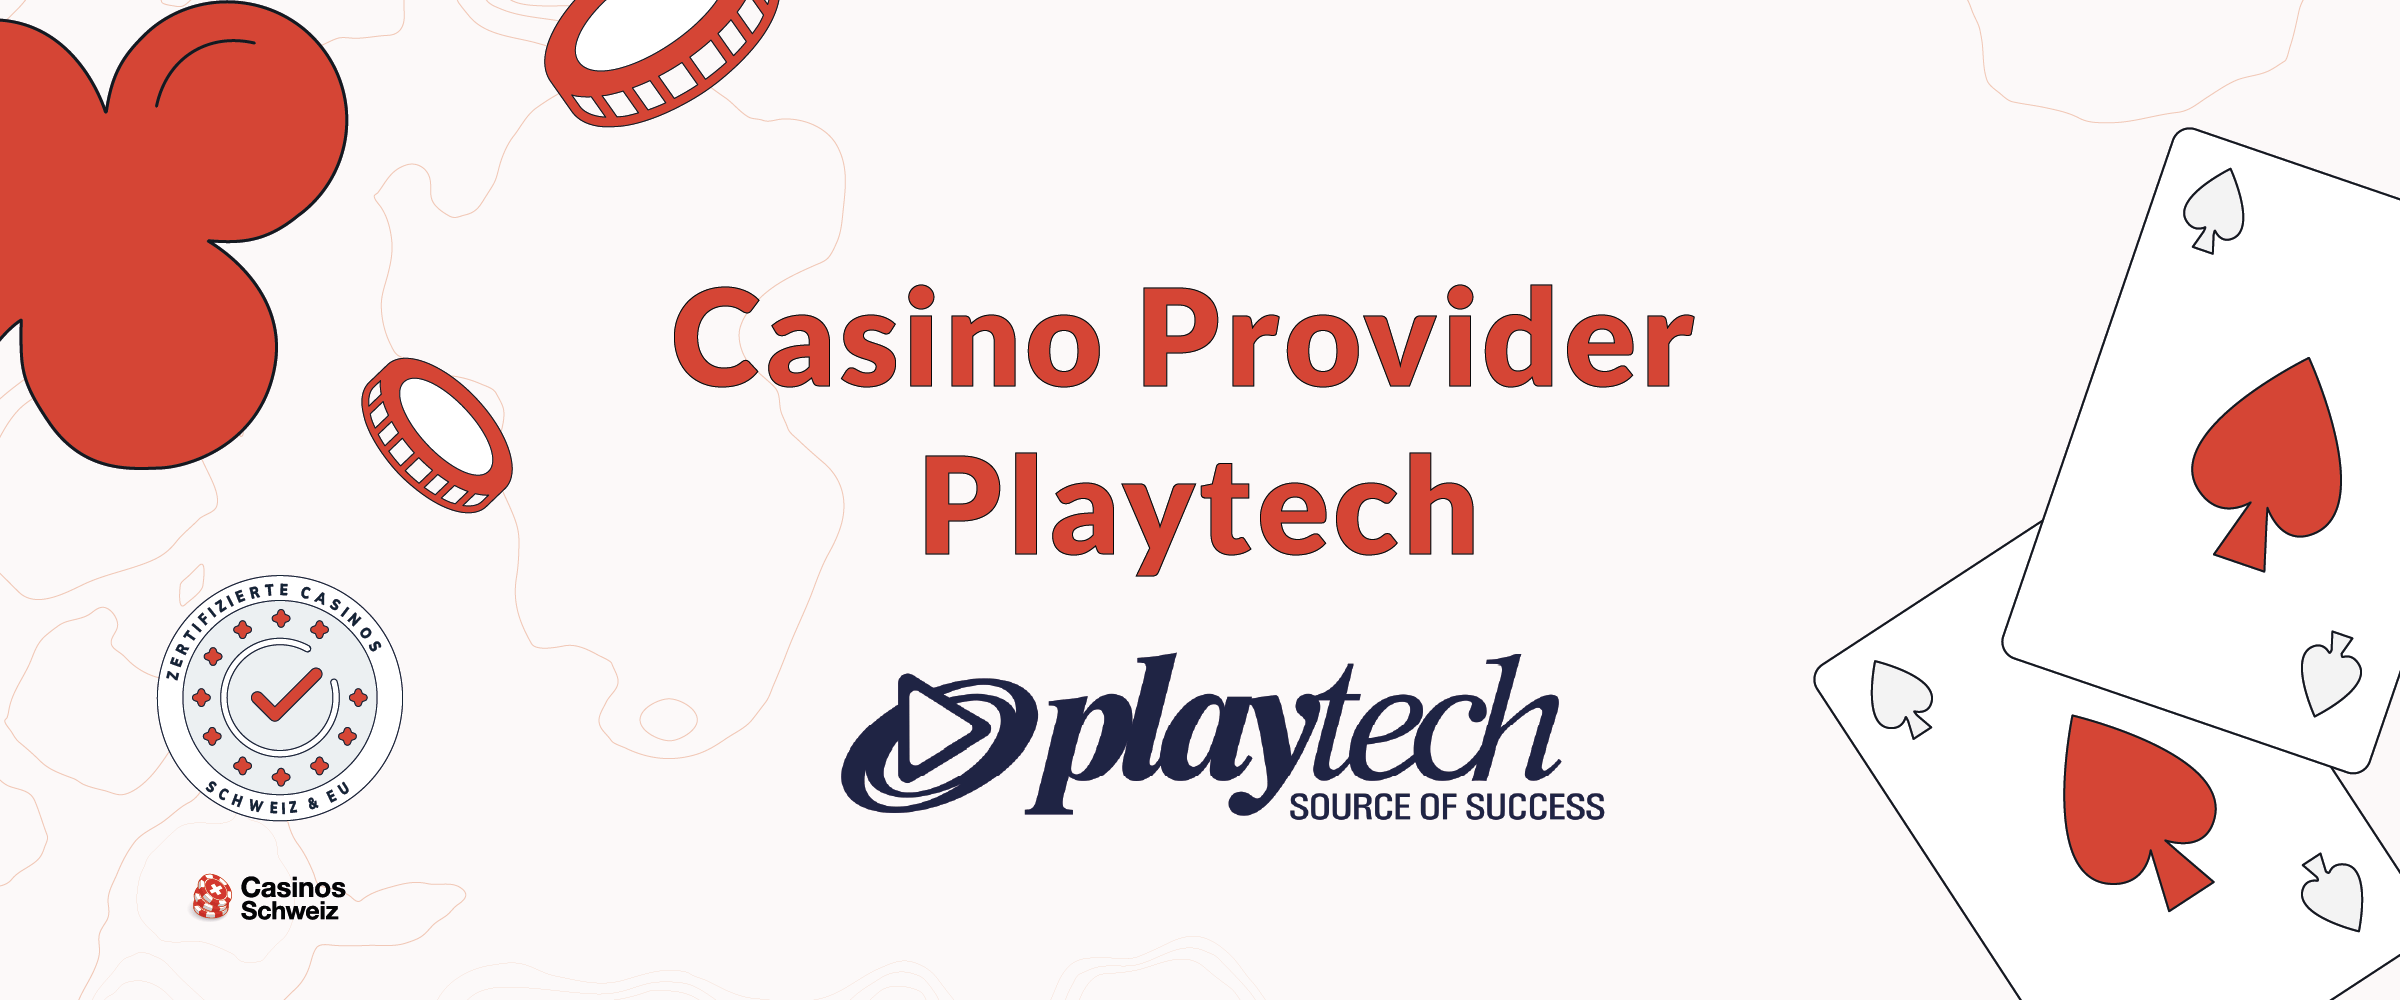 Casino Provider Playtech